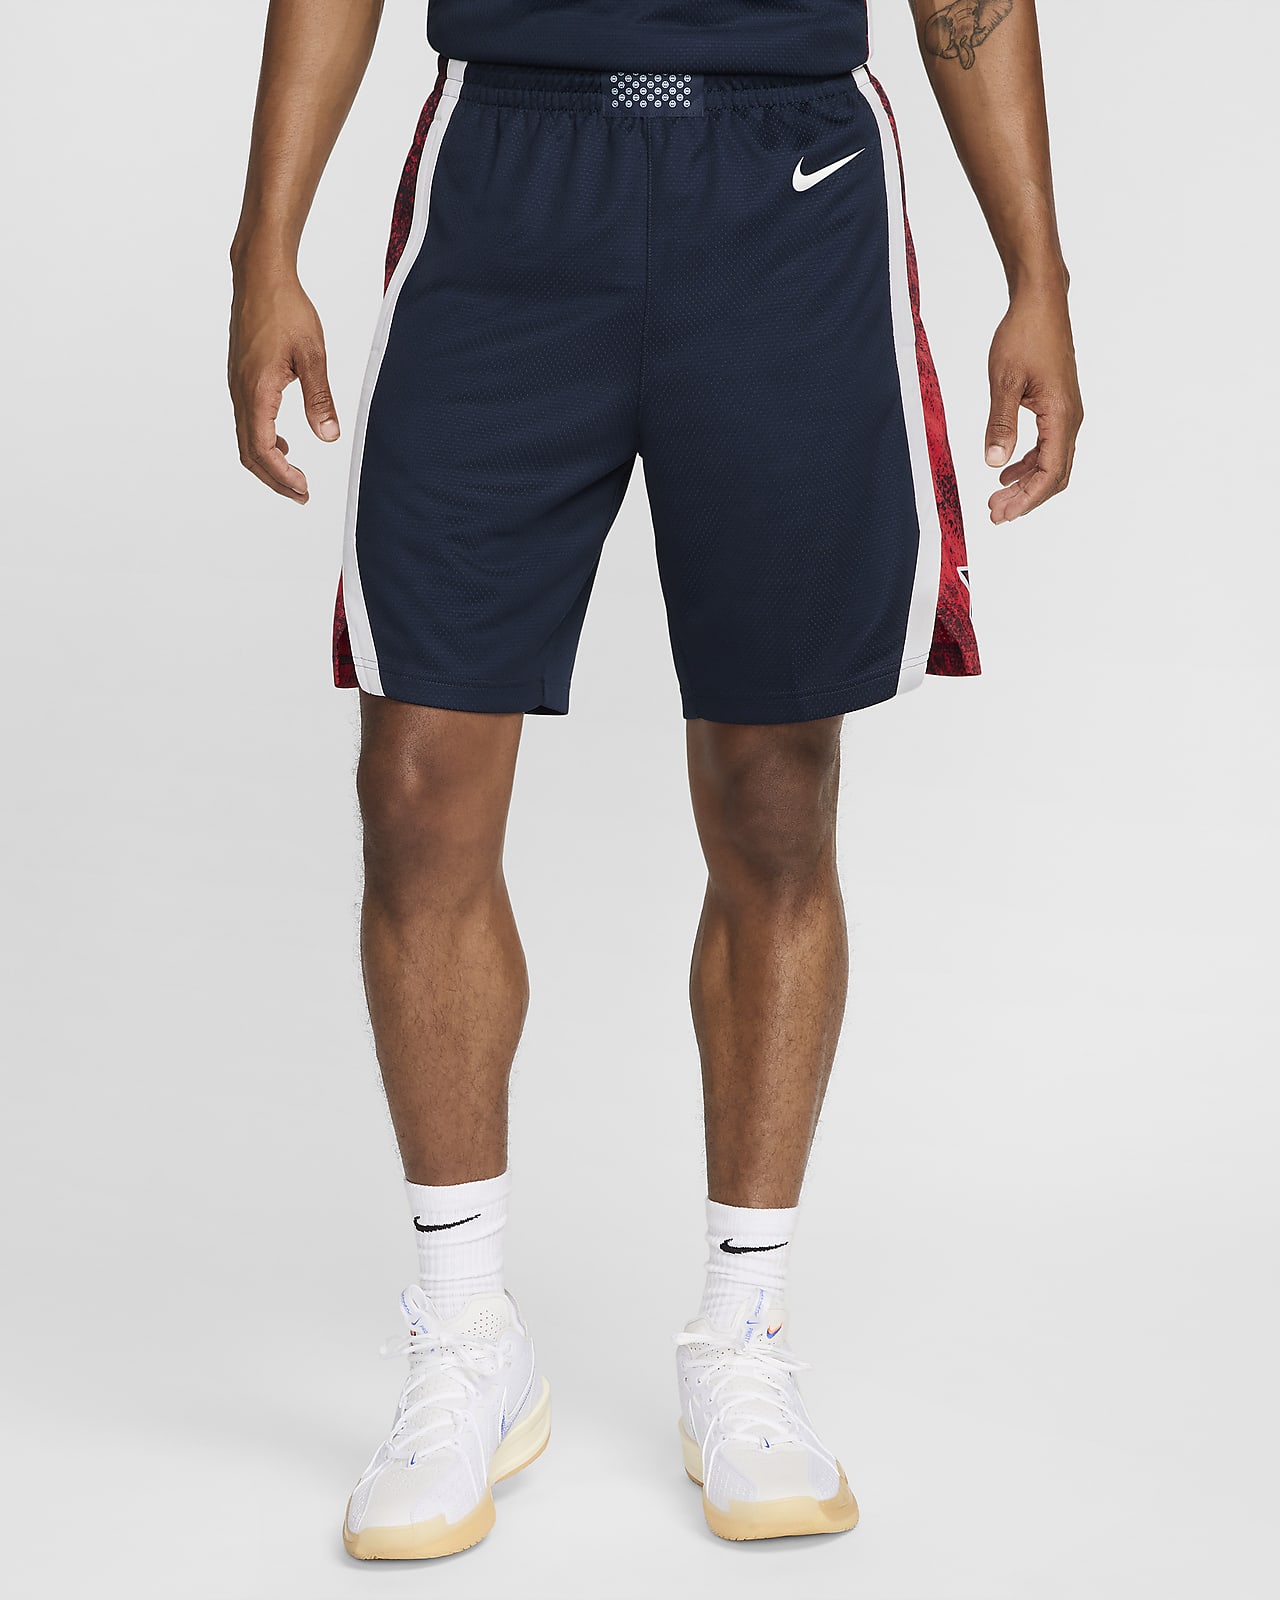 USA Limited Road Men's Jordan Basketball Shorts